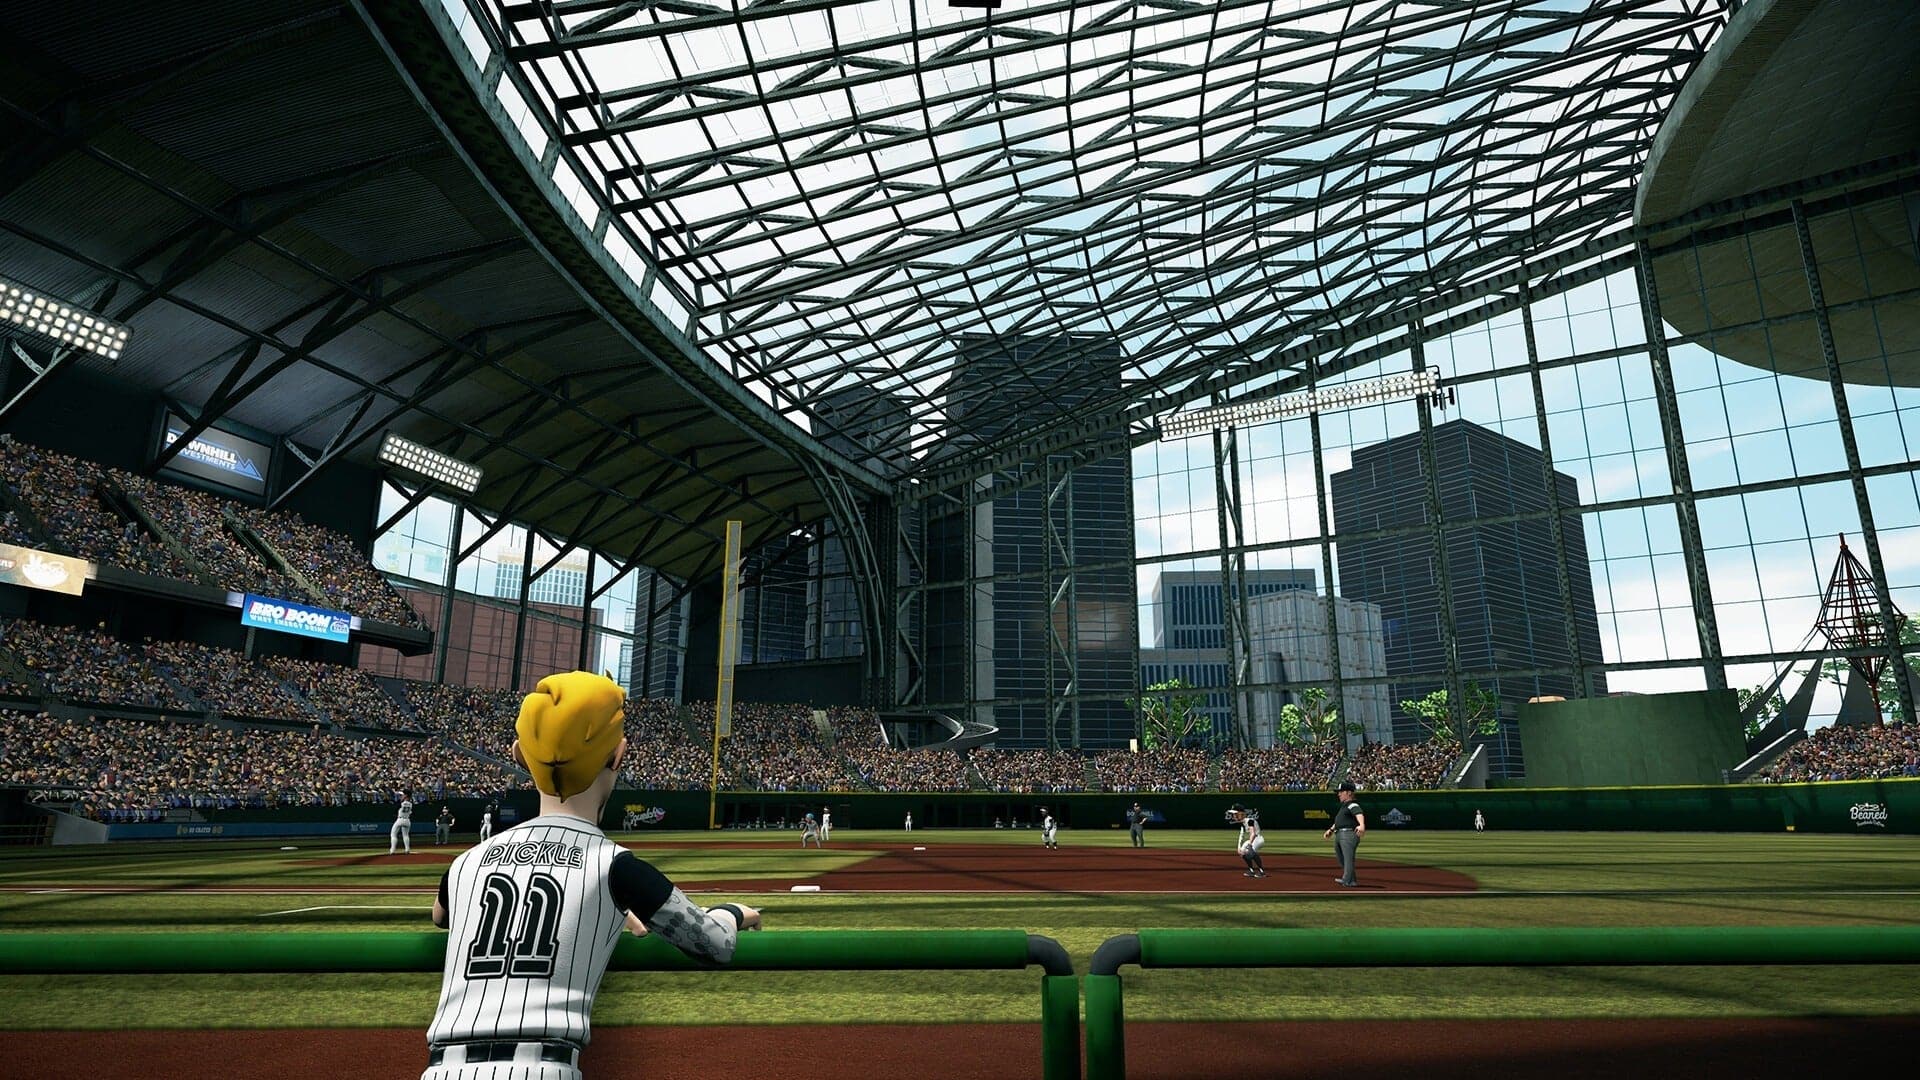 Super Mega Baseball 4 (Ballpark Edition) - Nintendo Switch - EXON - גיימינג ותוכנות - משחקים ותוכנות למחשב ולאקס בוקס!